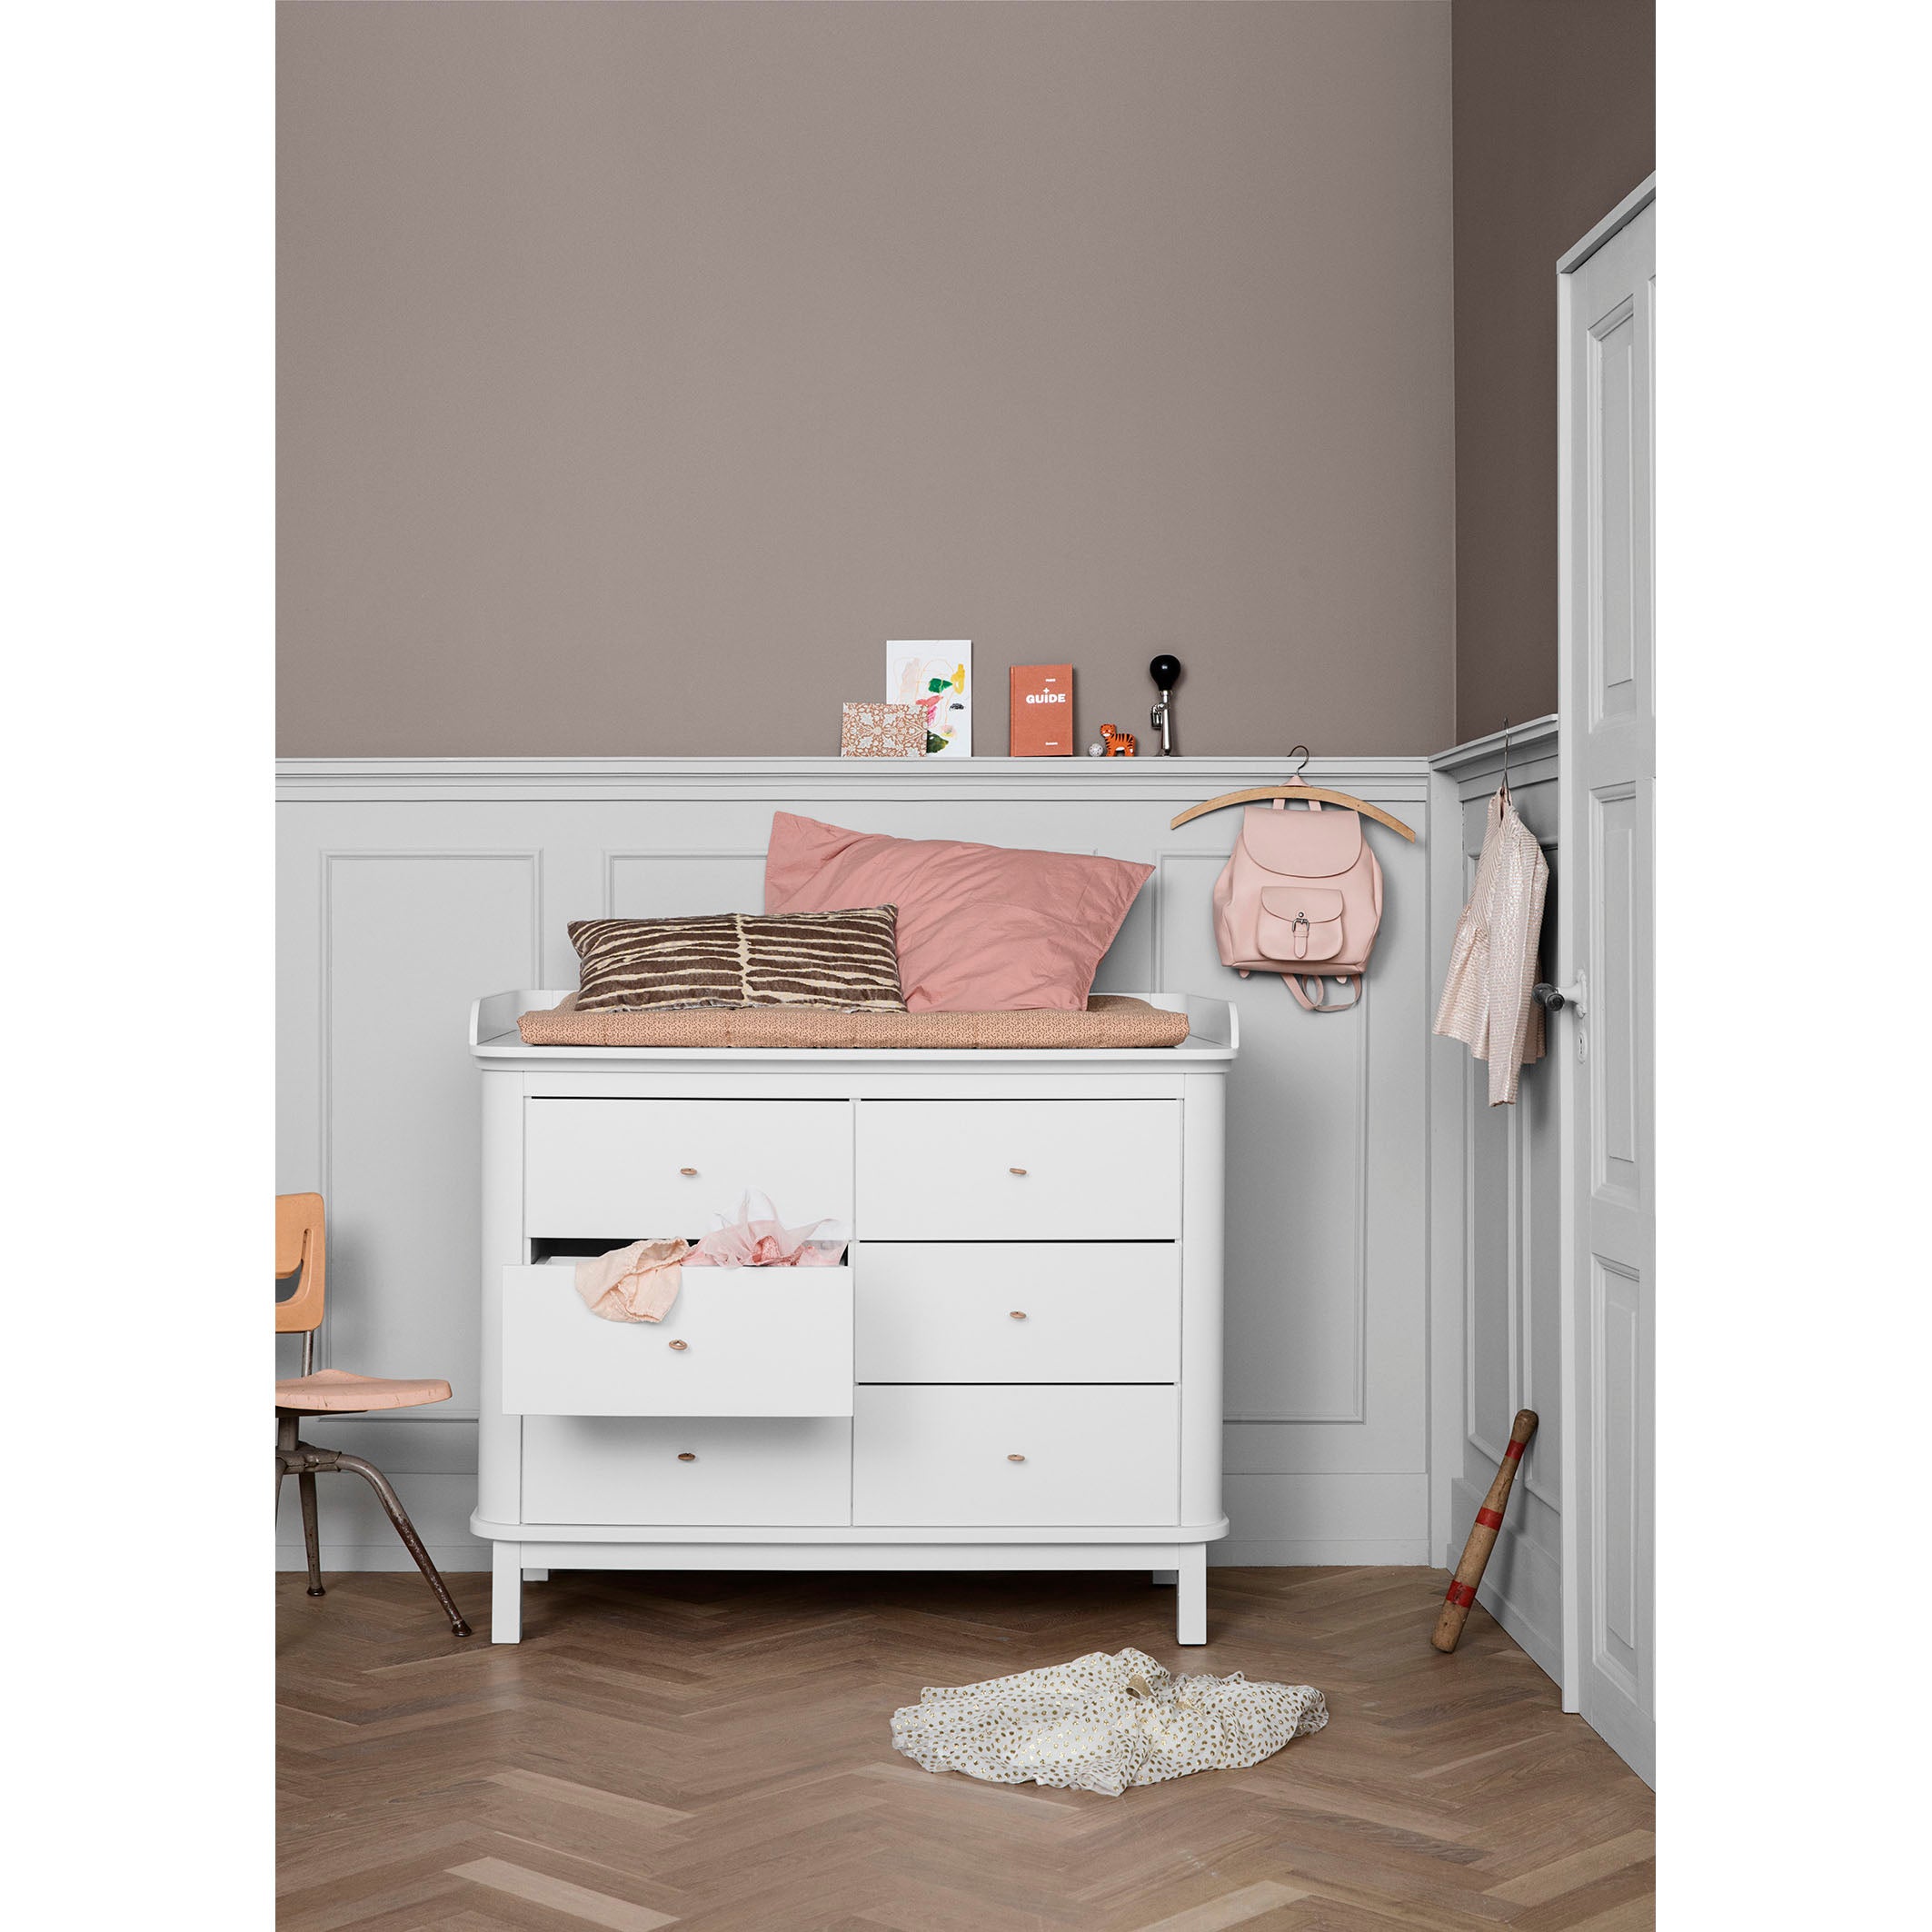 oliver-furniture-wood-nursery-plate-large-white-for-dresser-6-drawers- (6)